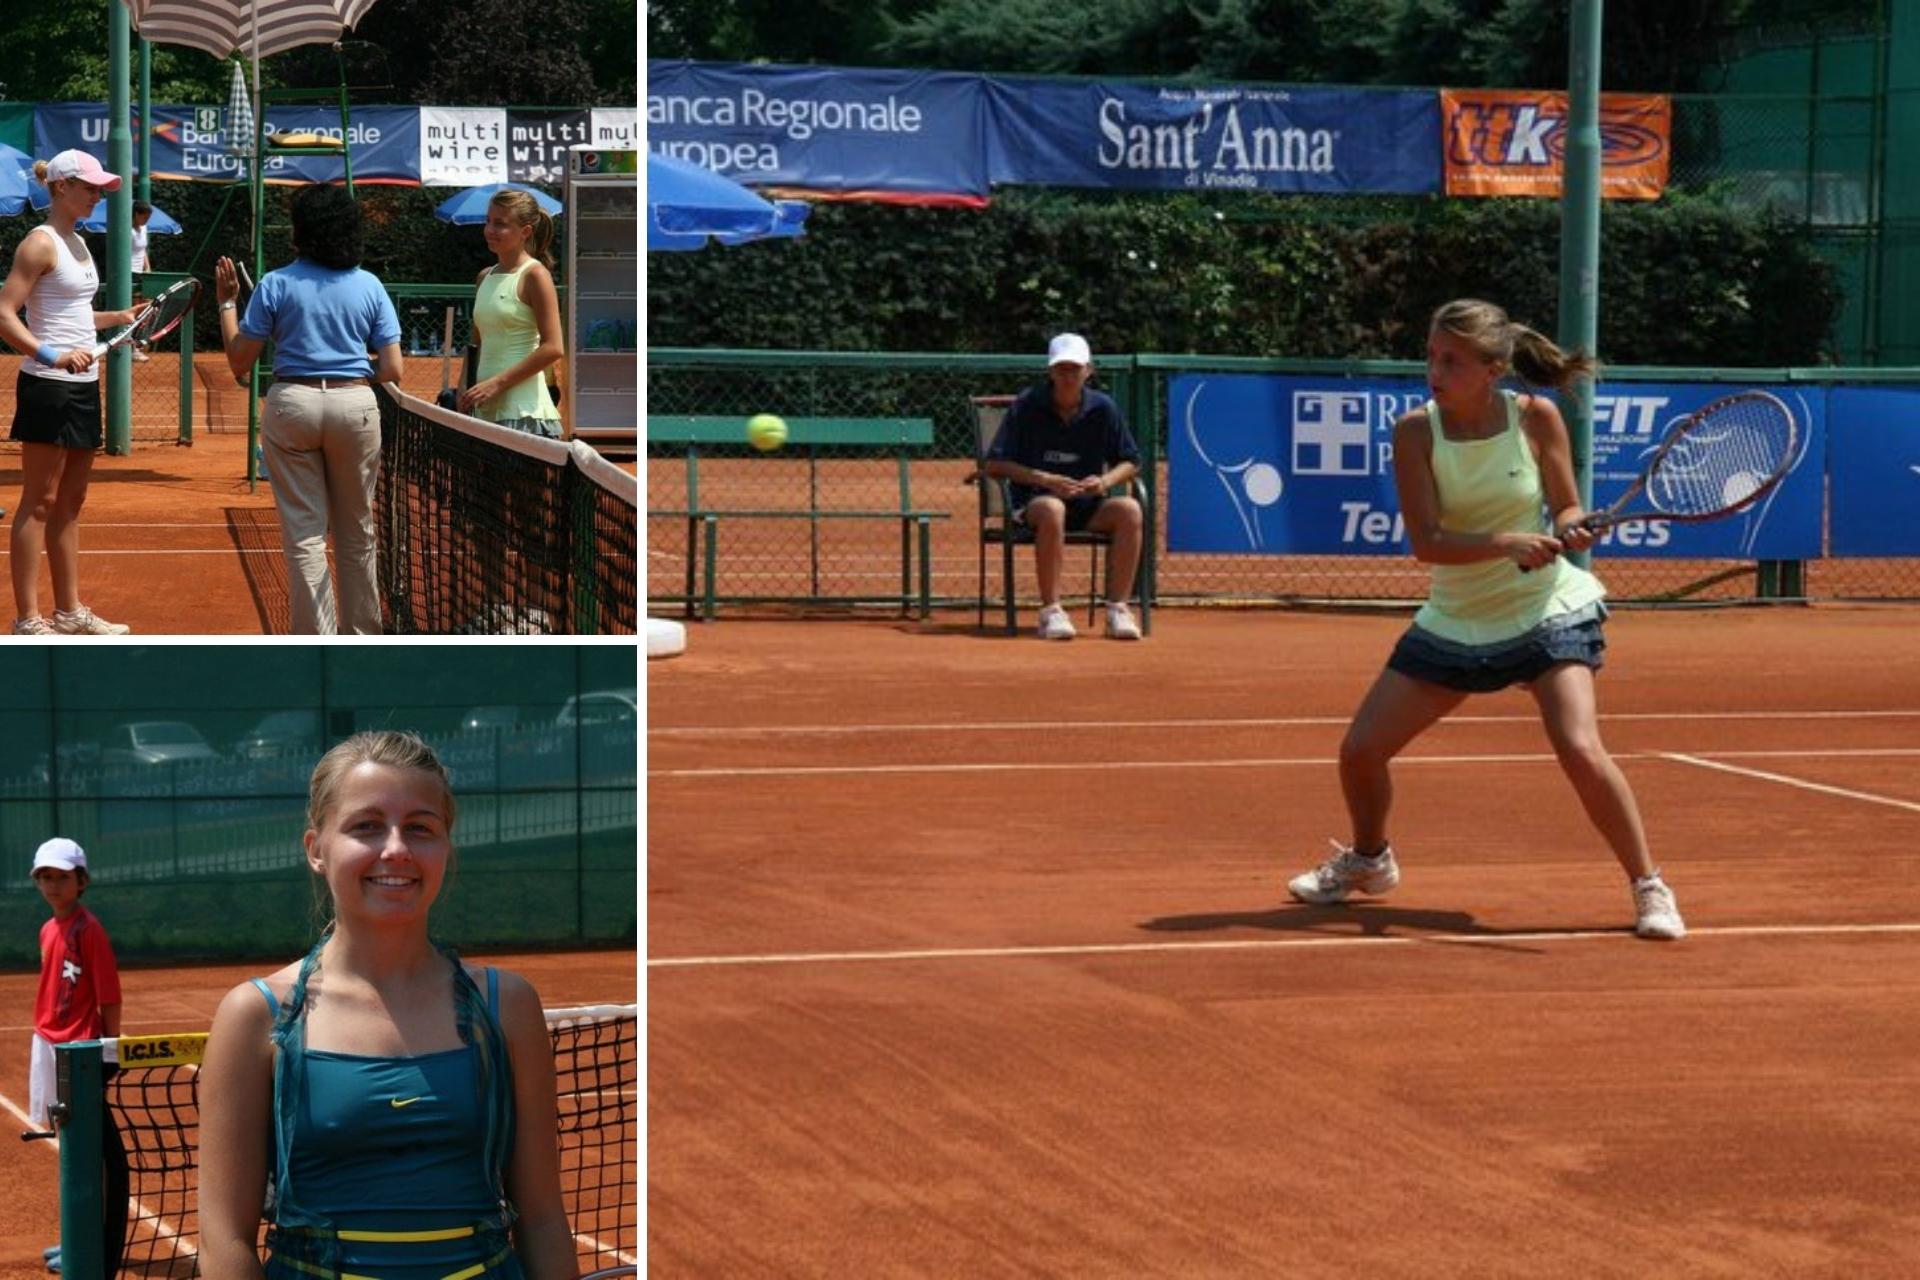 Mini Elena playing her first WTA tennis tournament